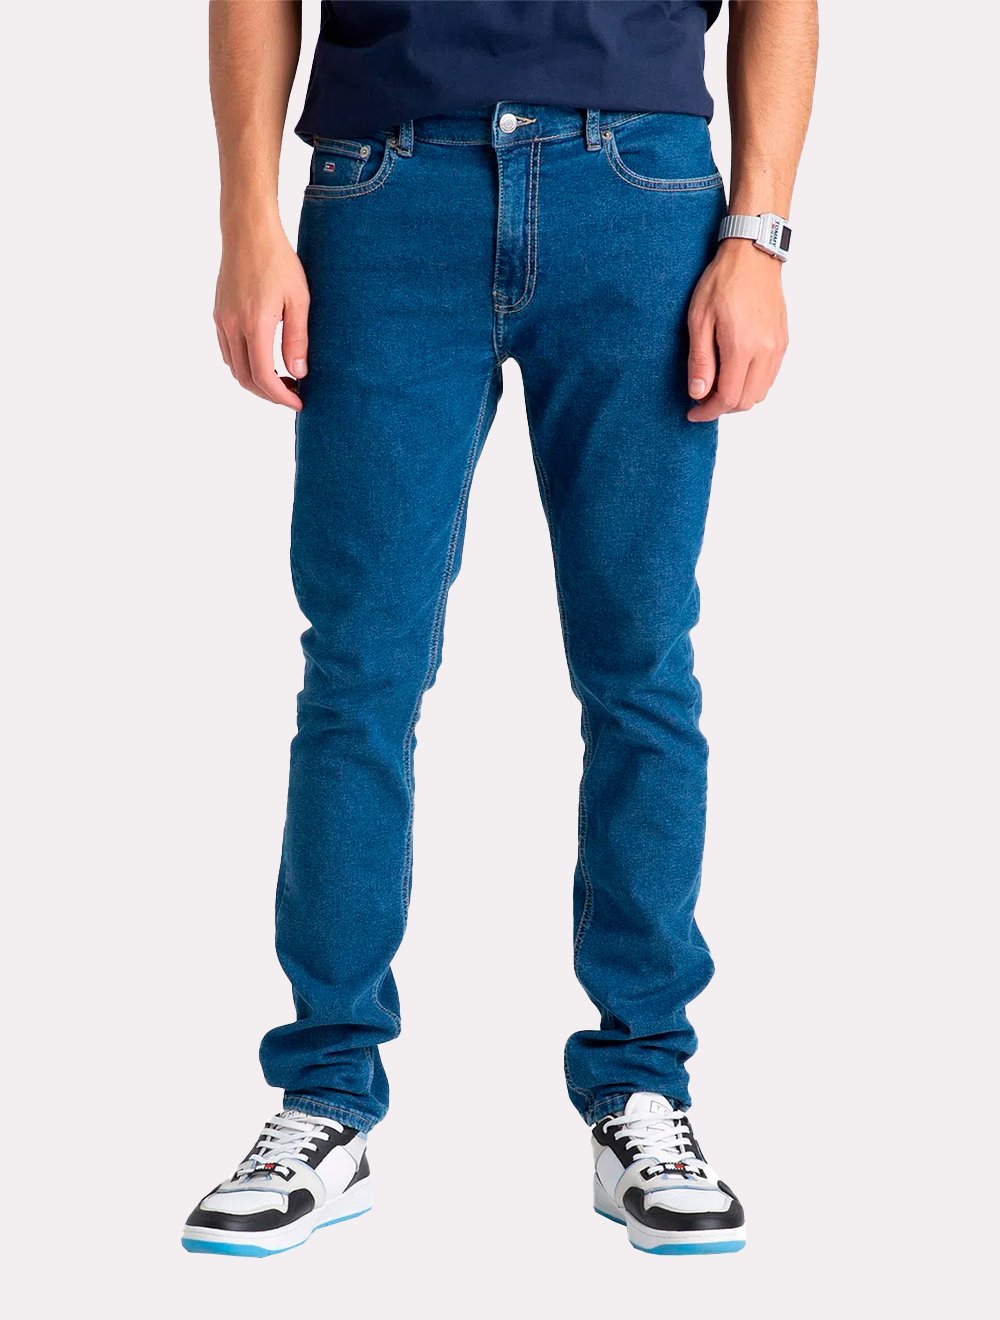 Calça Tommy Jeans Masculina Skinny Simon Denim Azul Médio